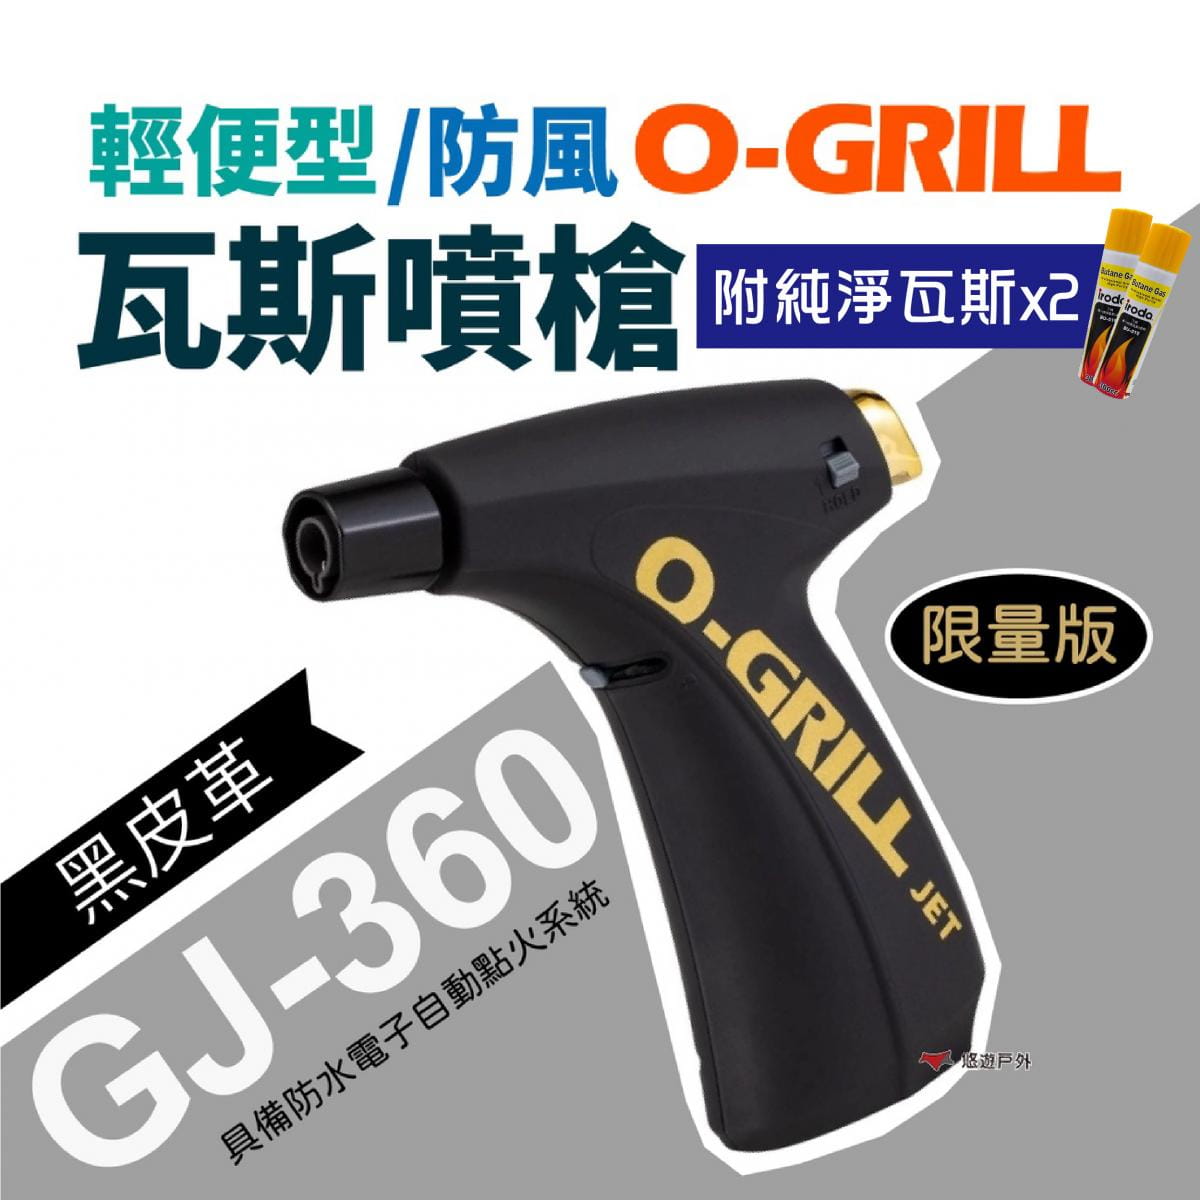 【 O-Grill】輕便型防風瓦斯噴槍(黑皮革)+純淨瓦斯*2 (悠遊戶外) 0